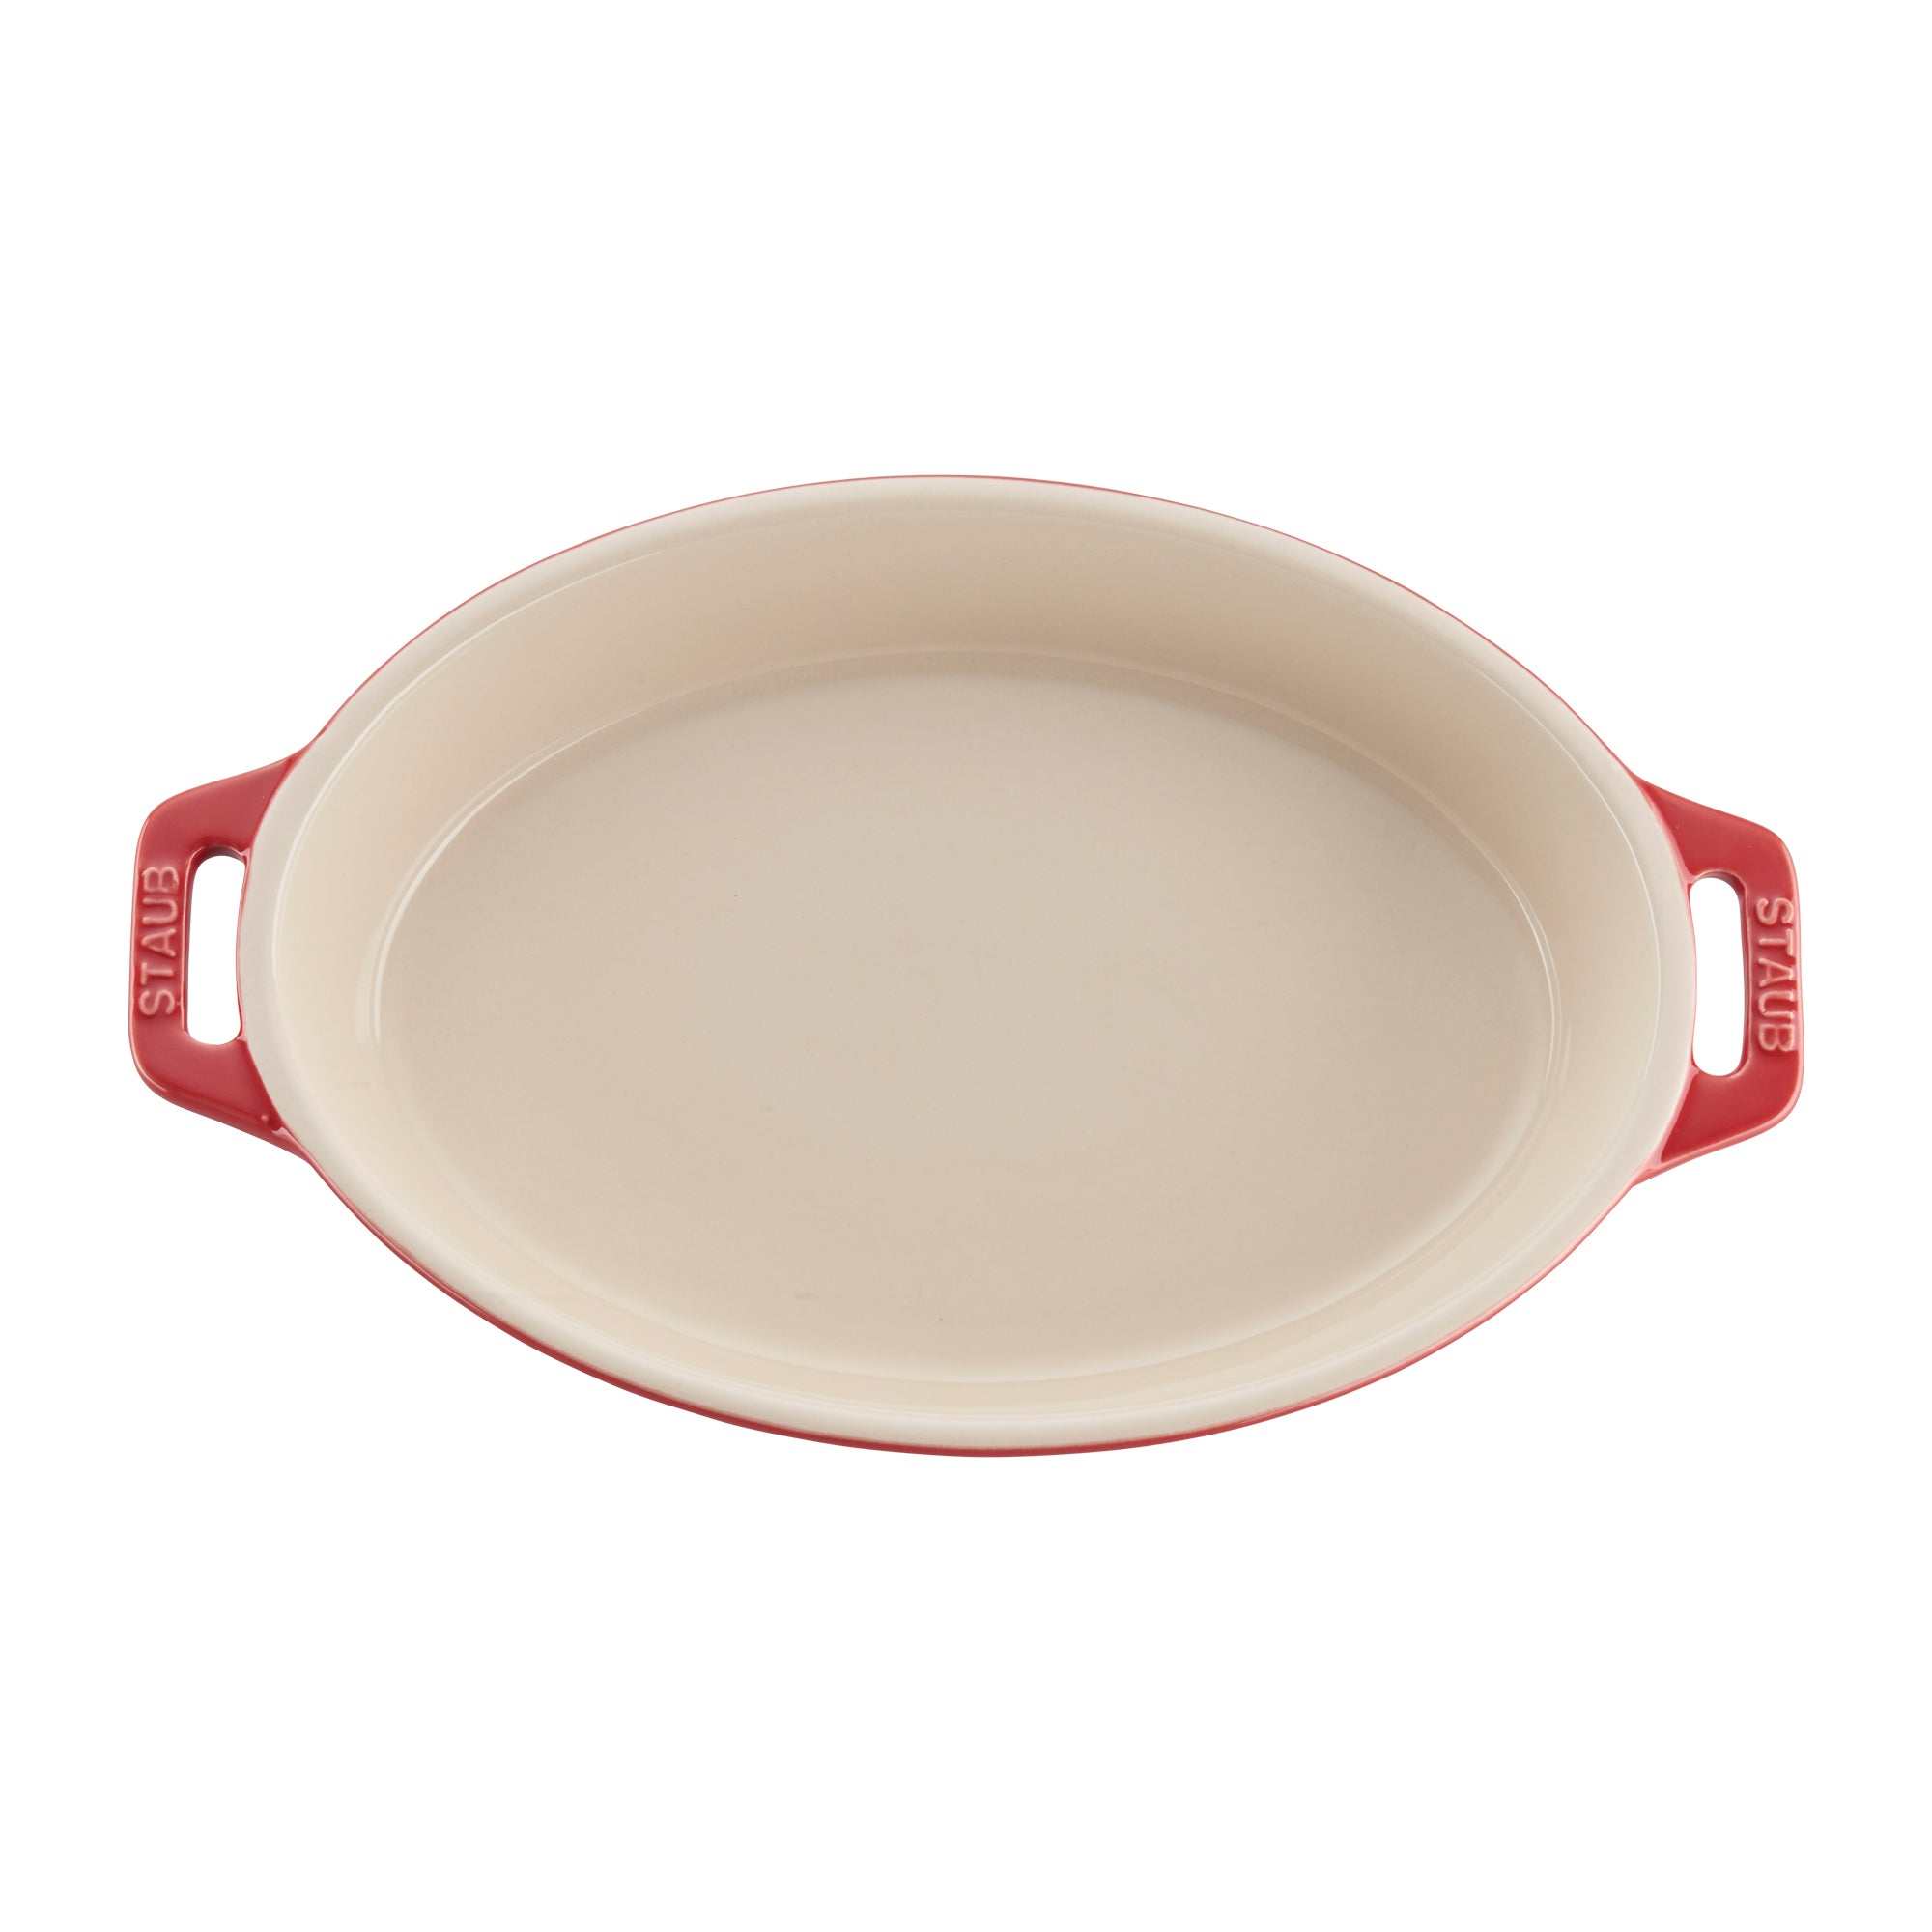 Staub Ceramic 2-pc Oval Baking Dish Set - Cherry